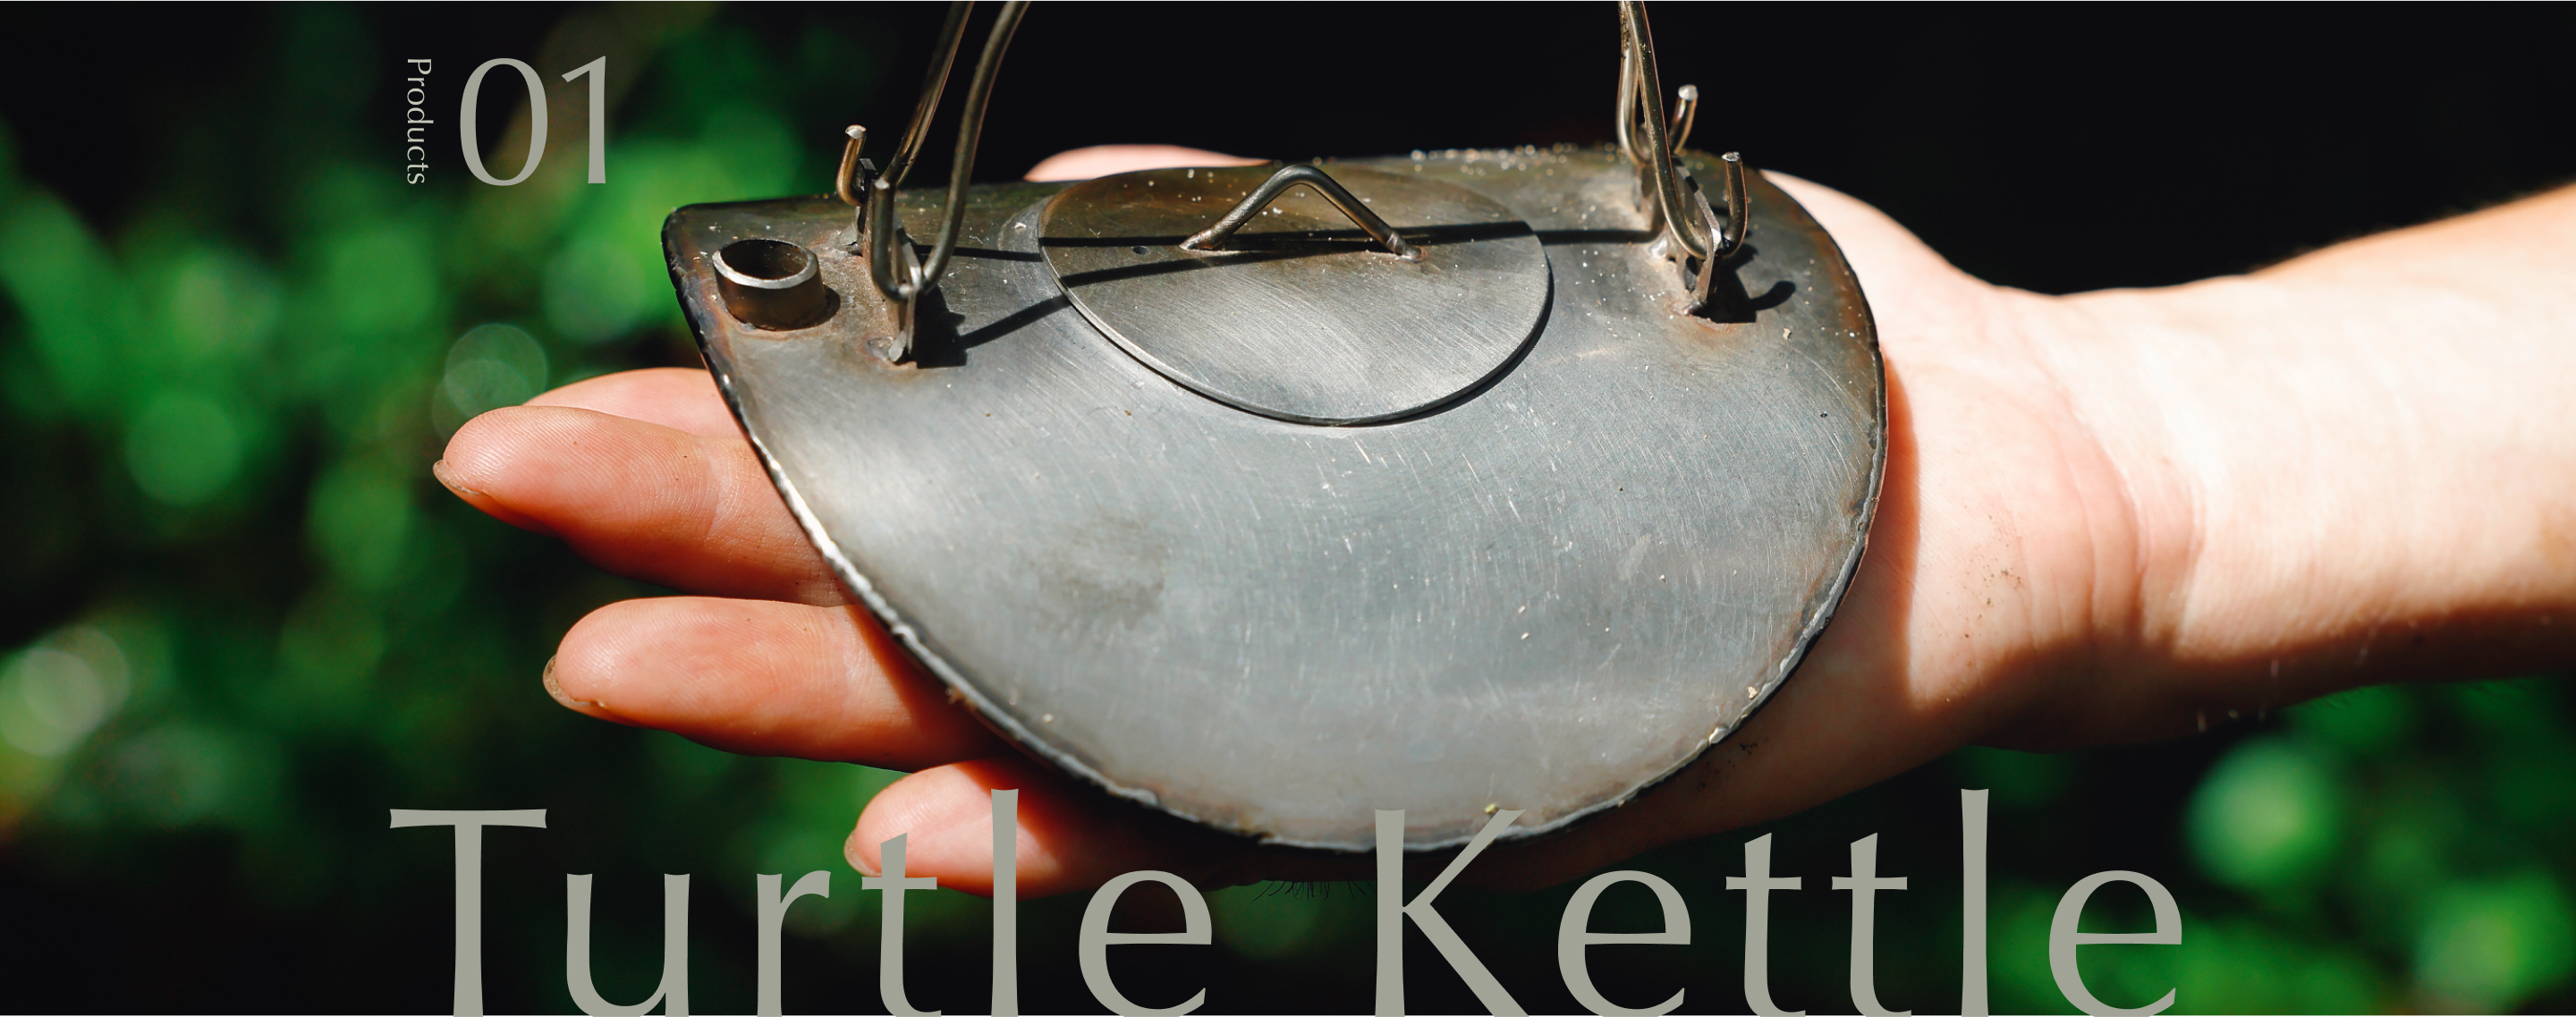 Turtle Kettle